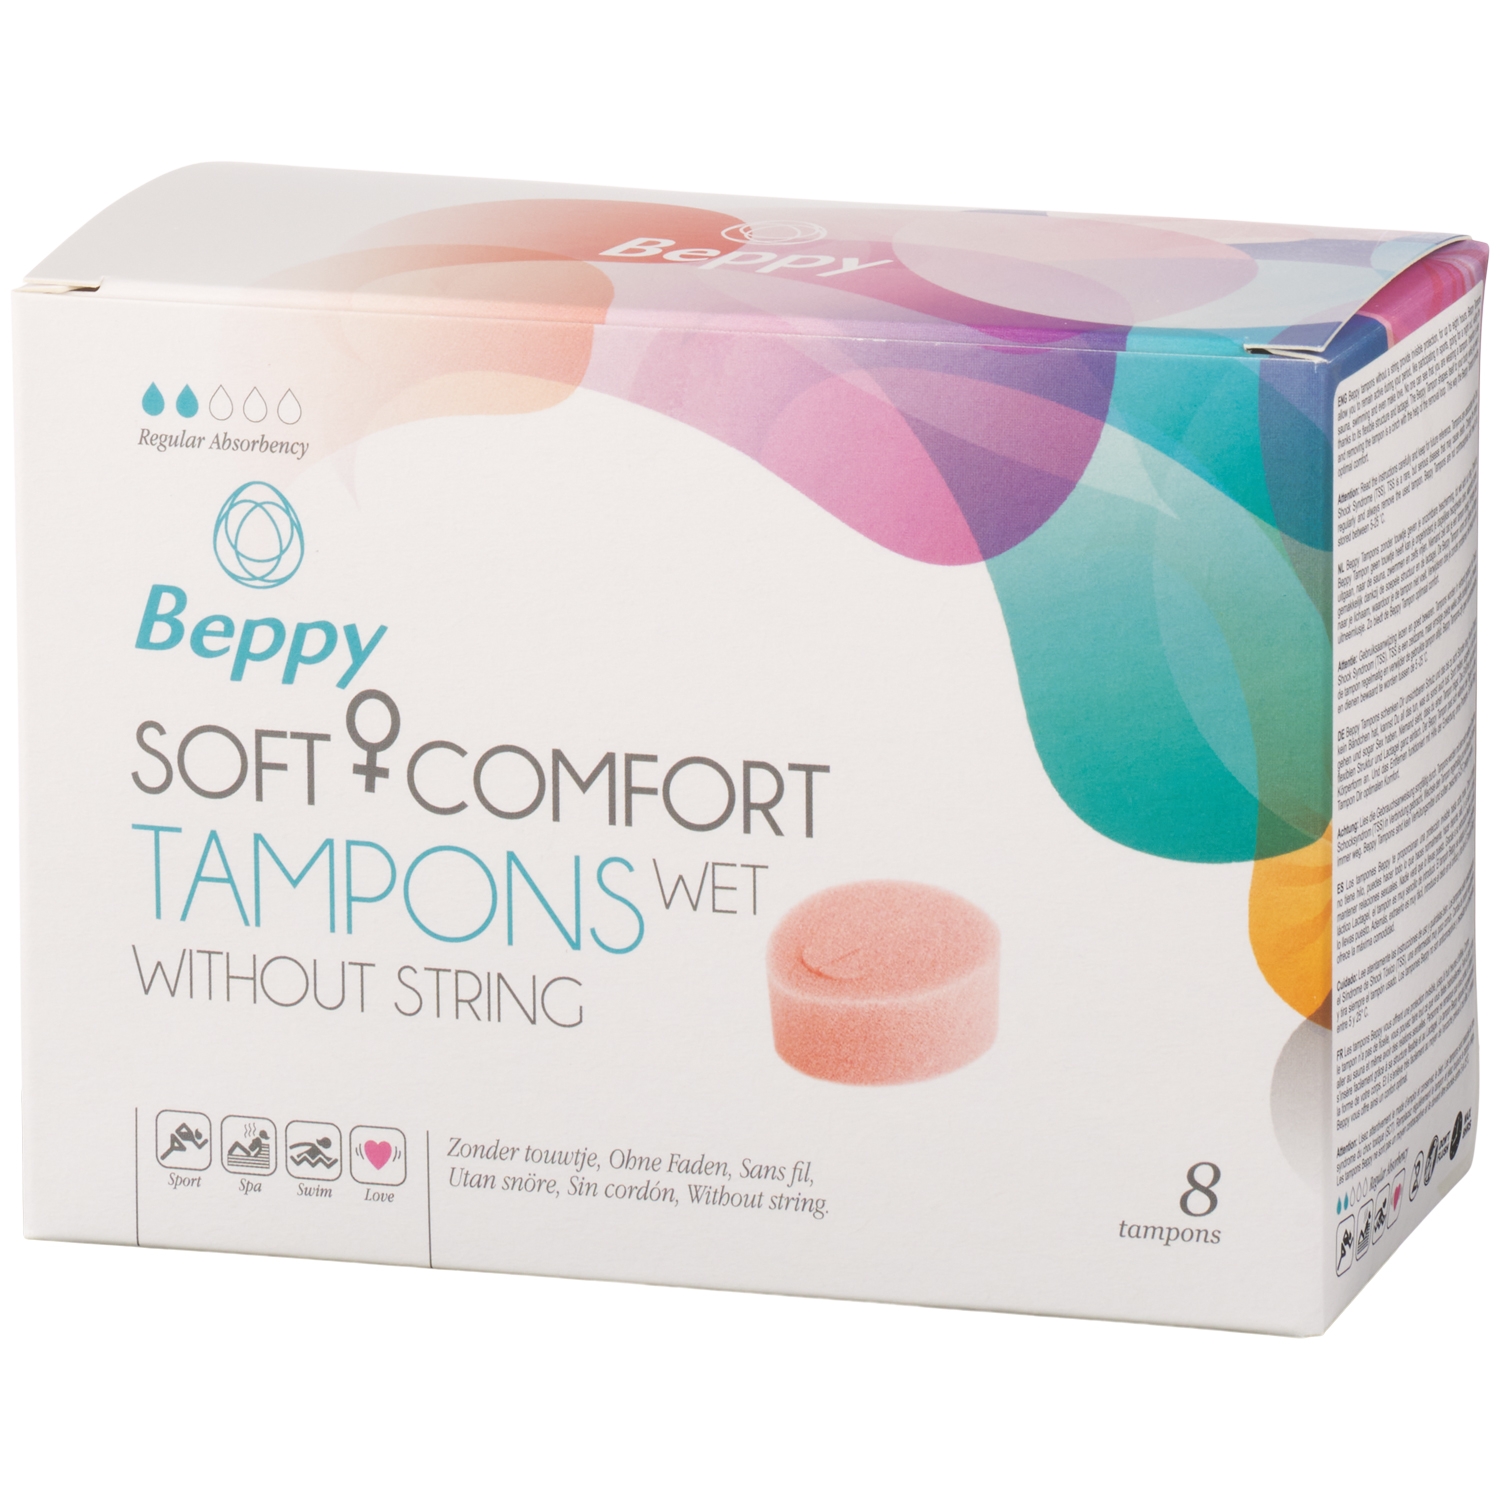 Beppy Soft + Comfort Tampons Wet 8 pcs - Rosa